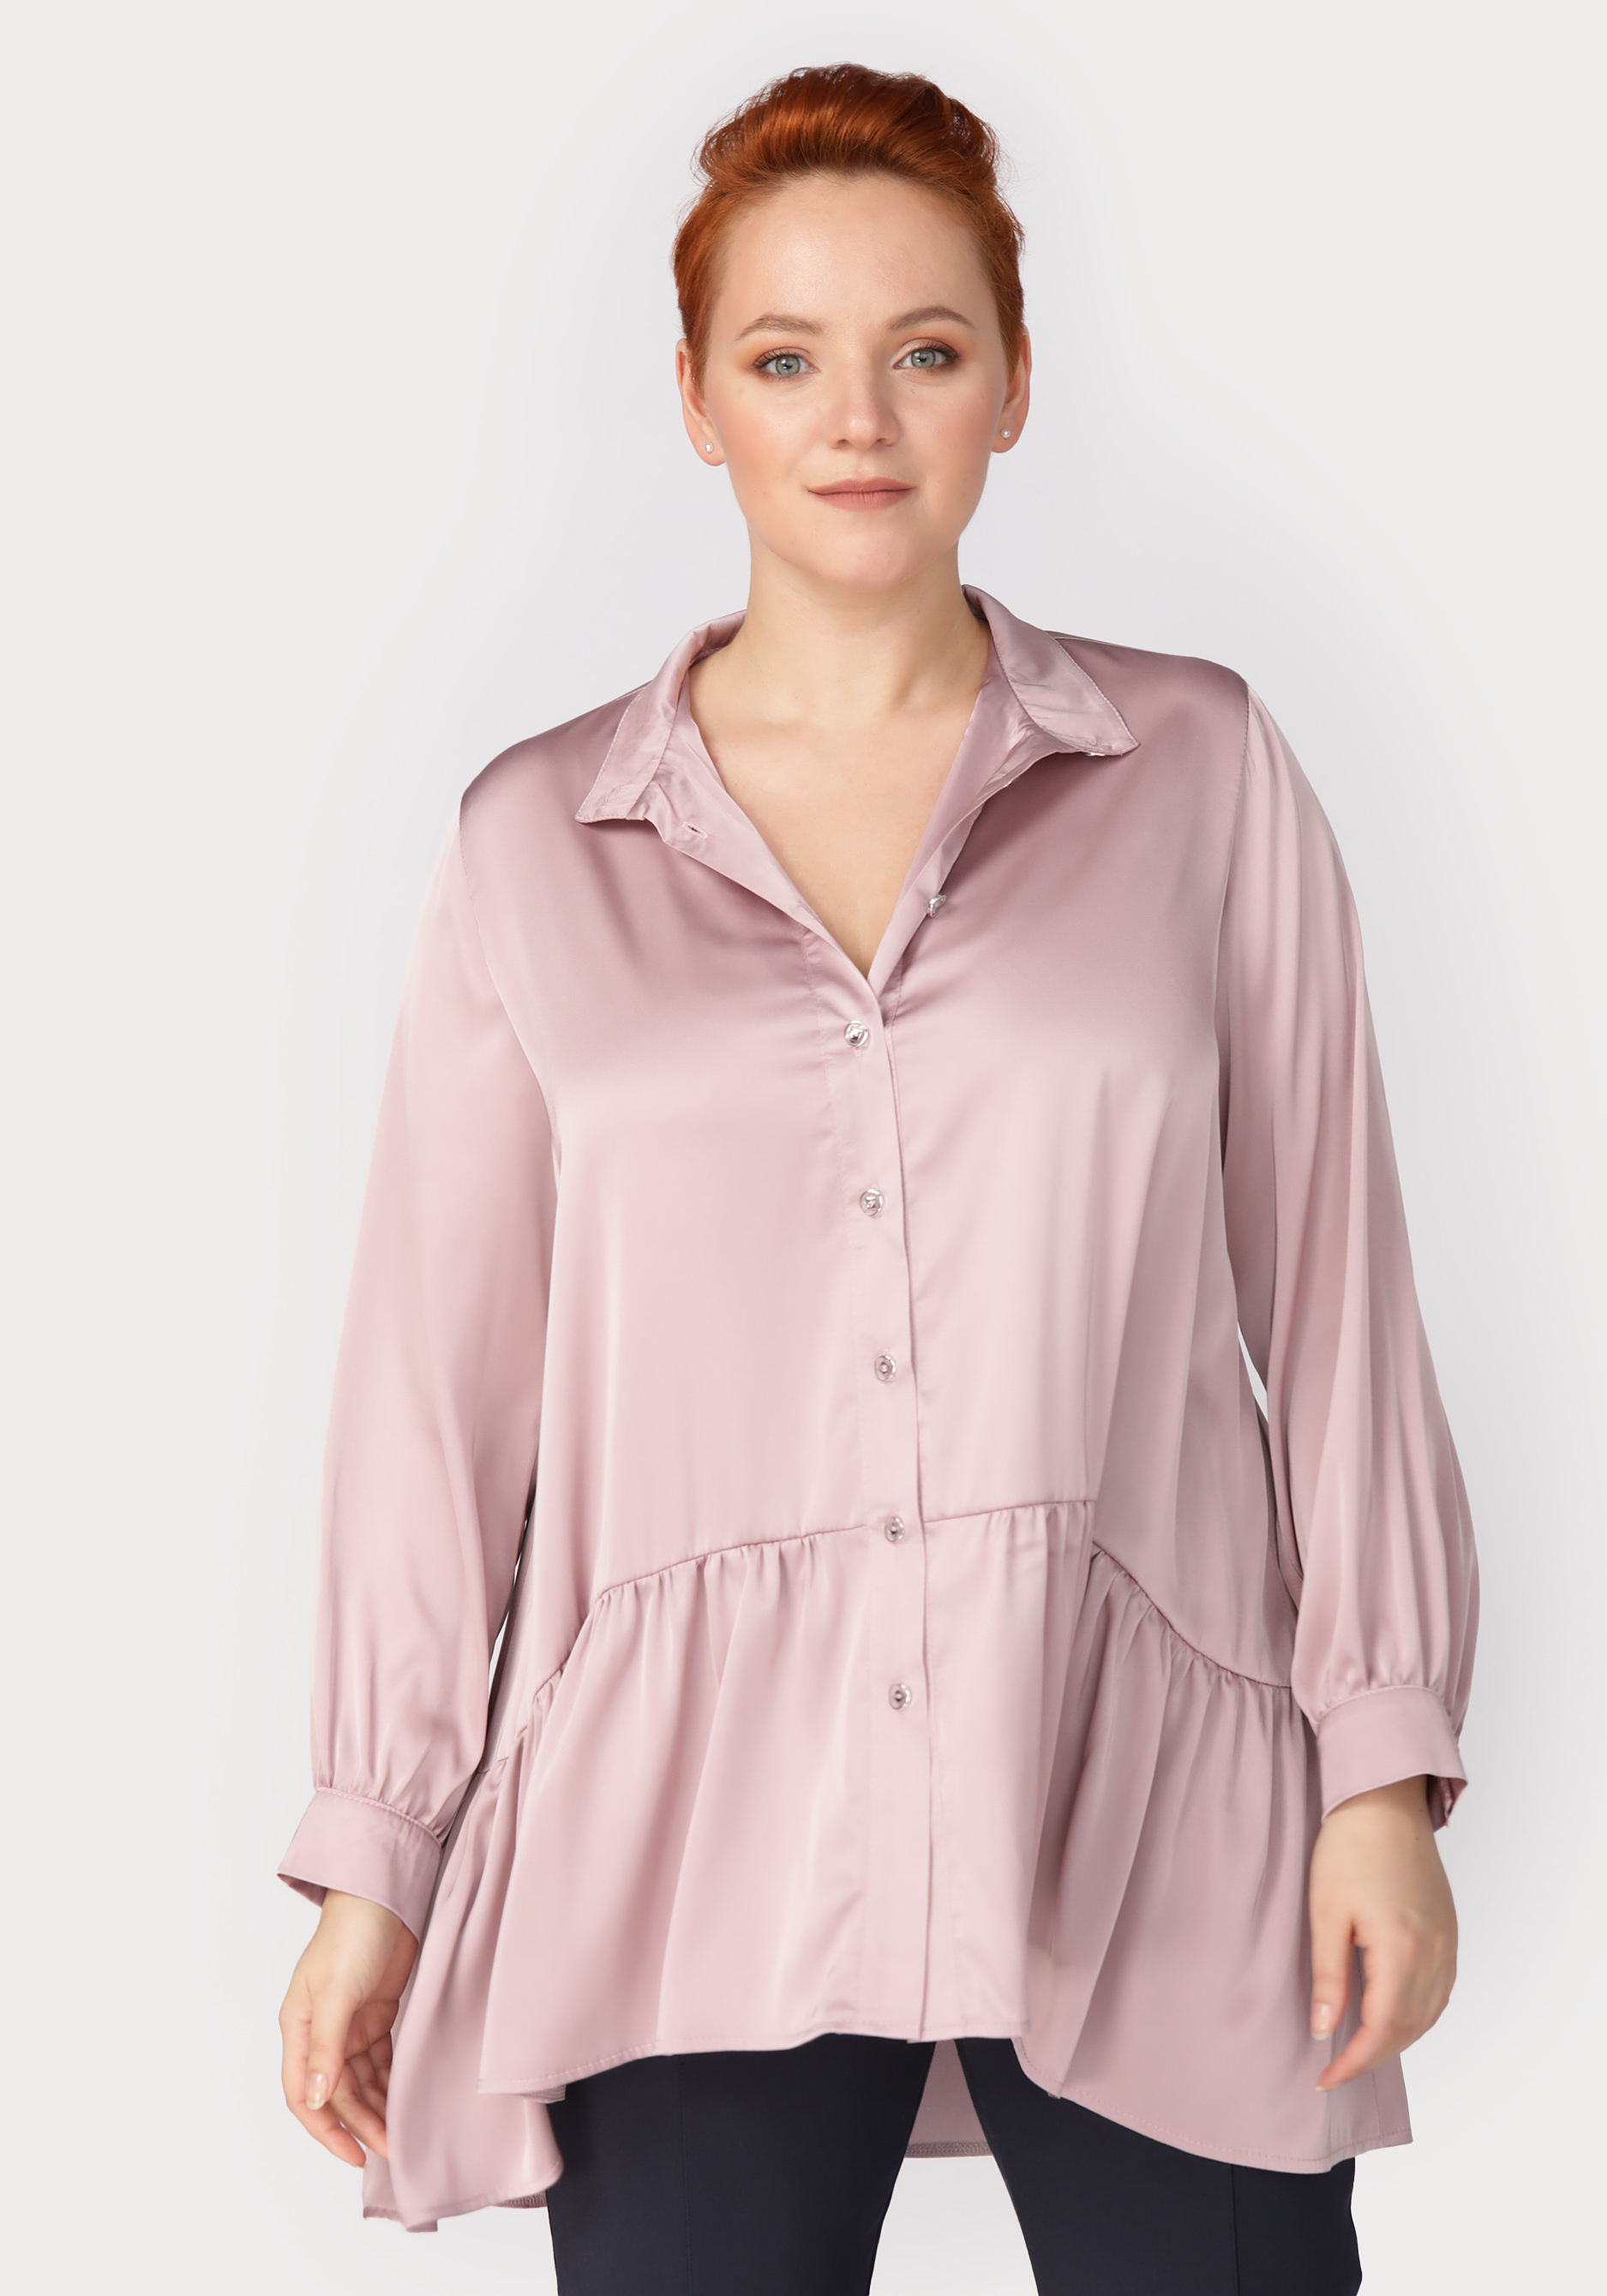 блуза с притачным воланом на сборке Блуза с воланом по низу